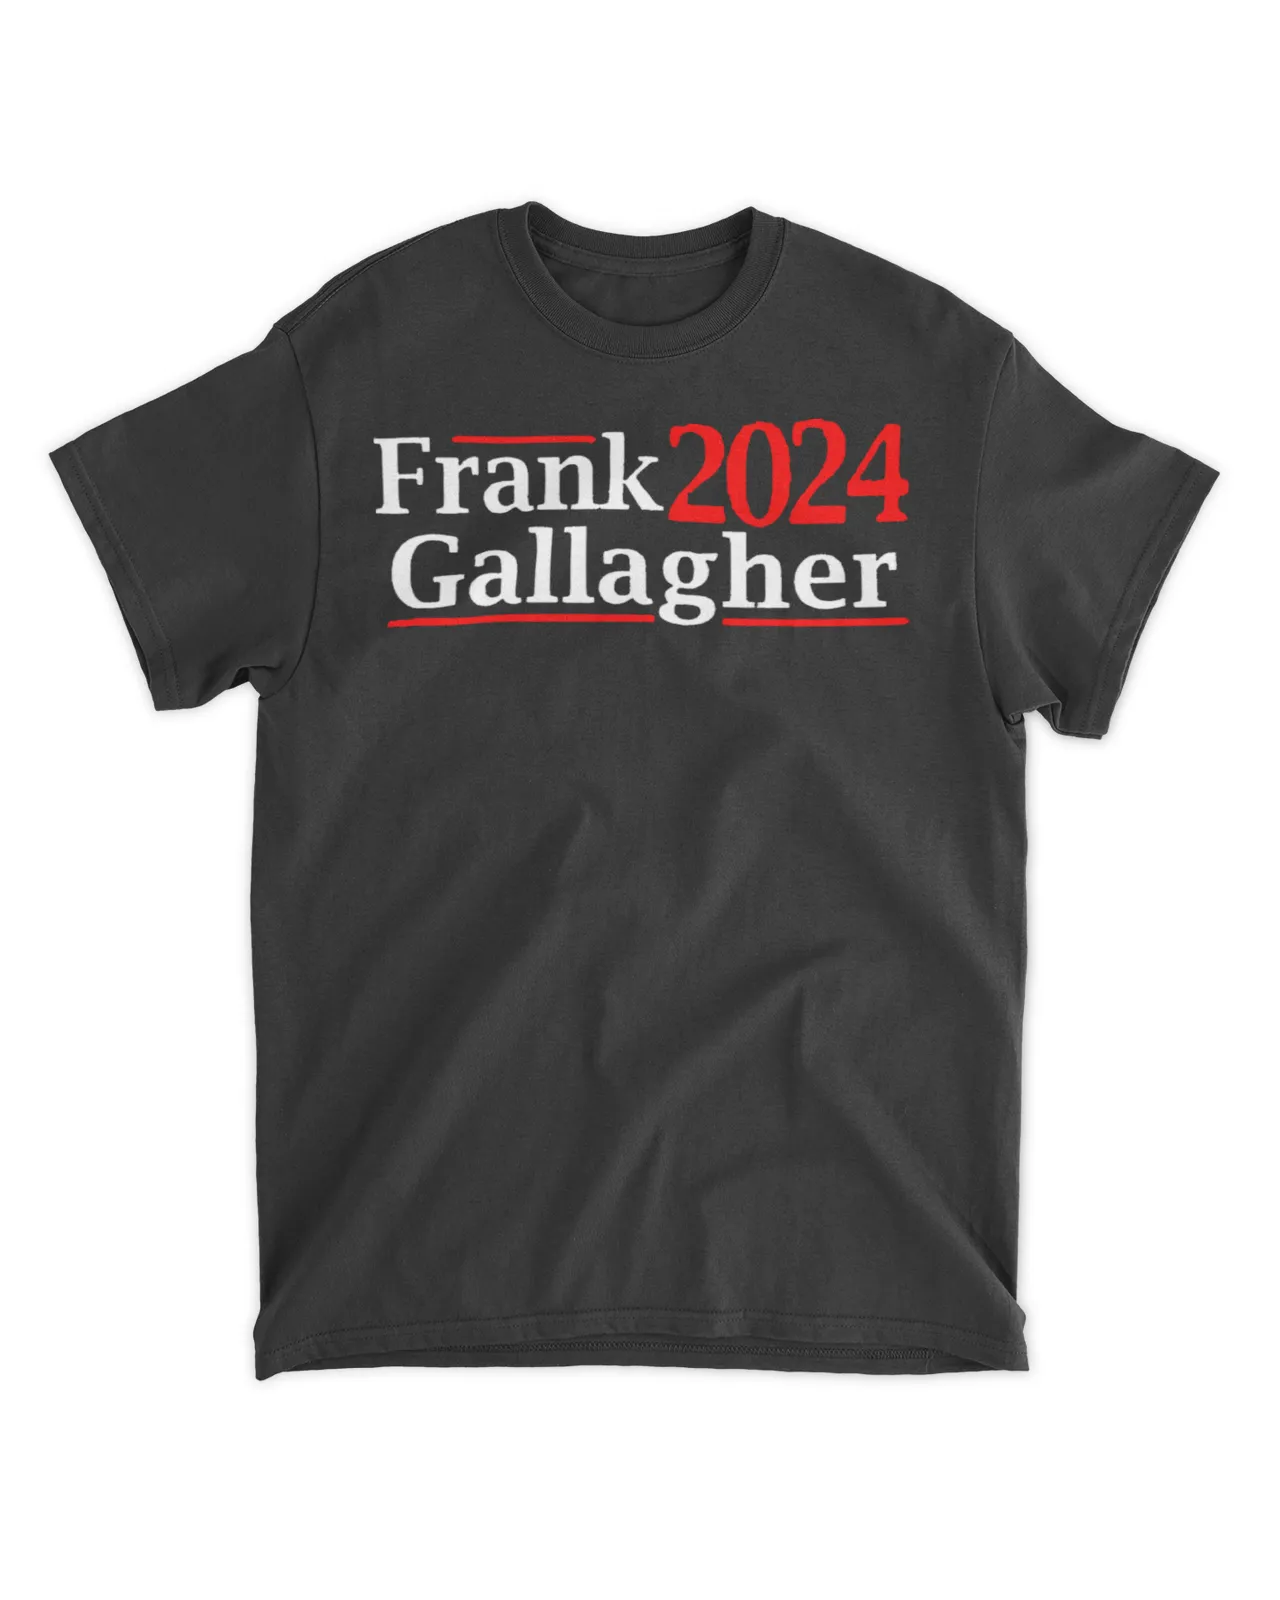  Frank Gallagher 2024 shirt